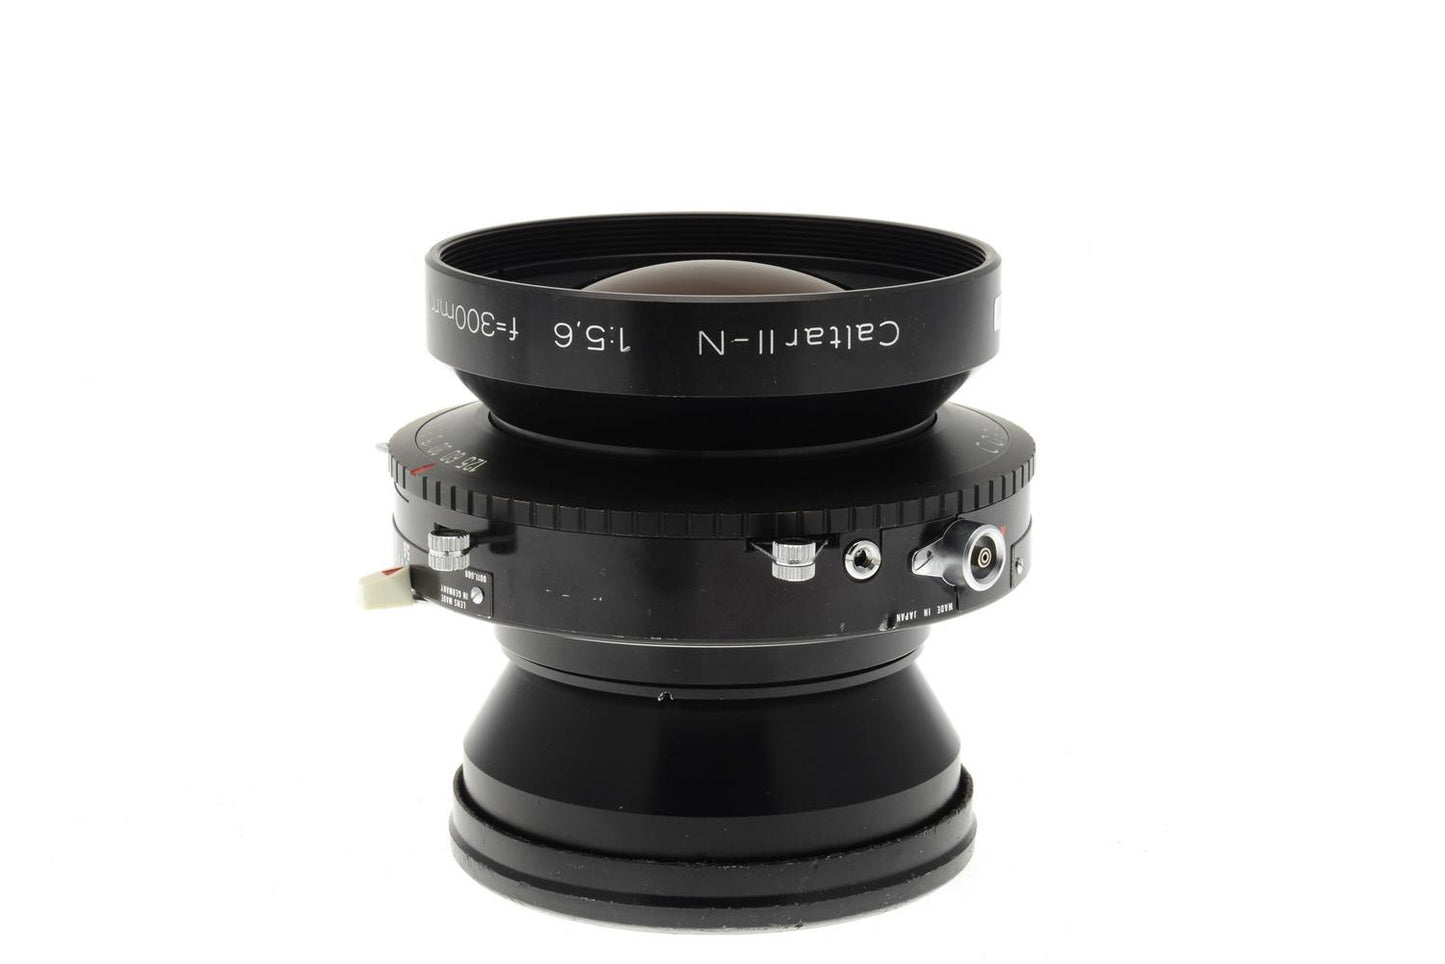 Calumet 300mm f5.6 Caltar II-N (Shutter) - Lens